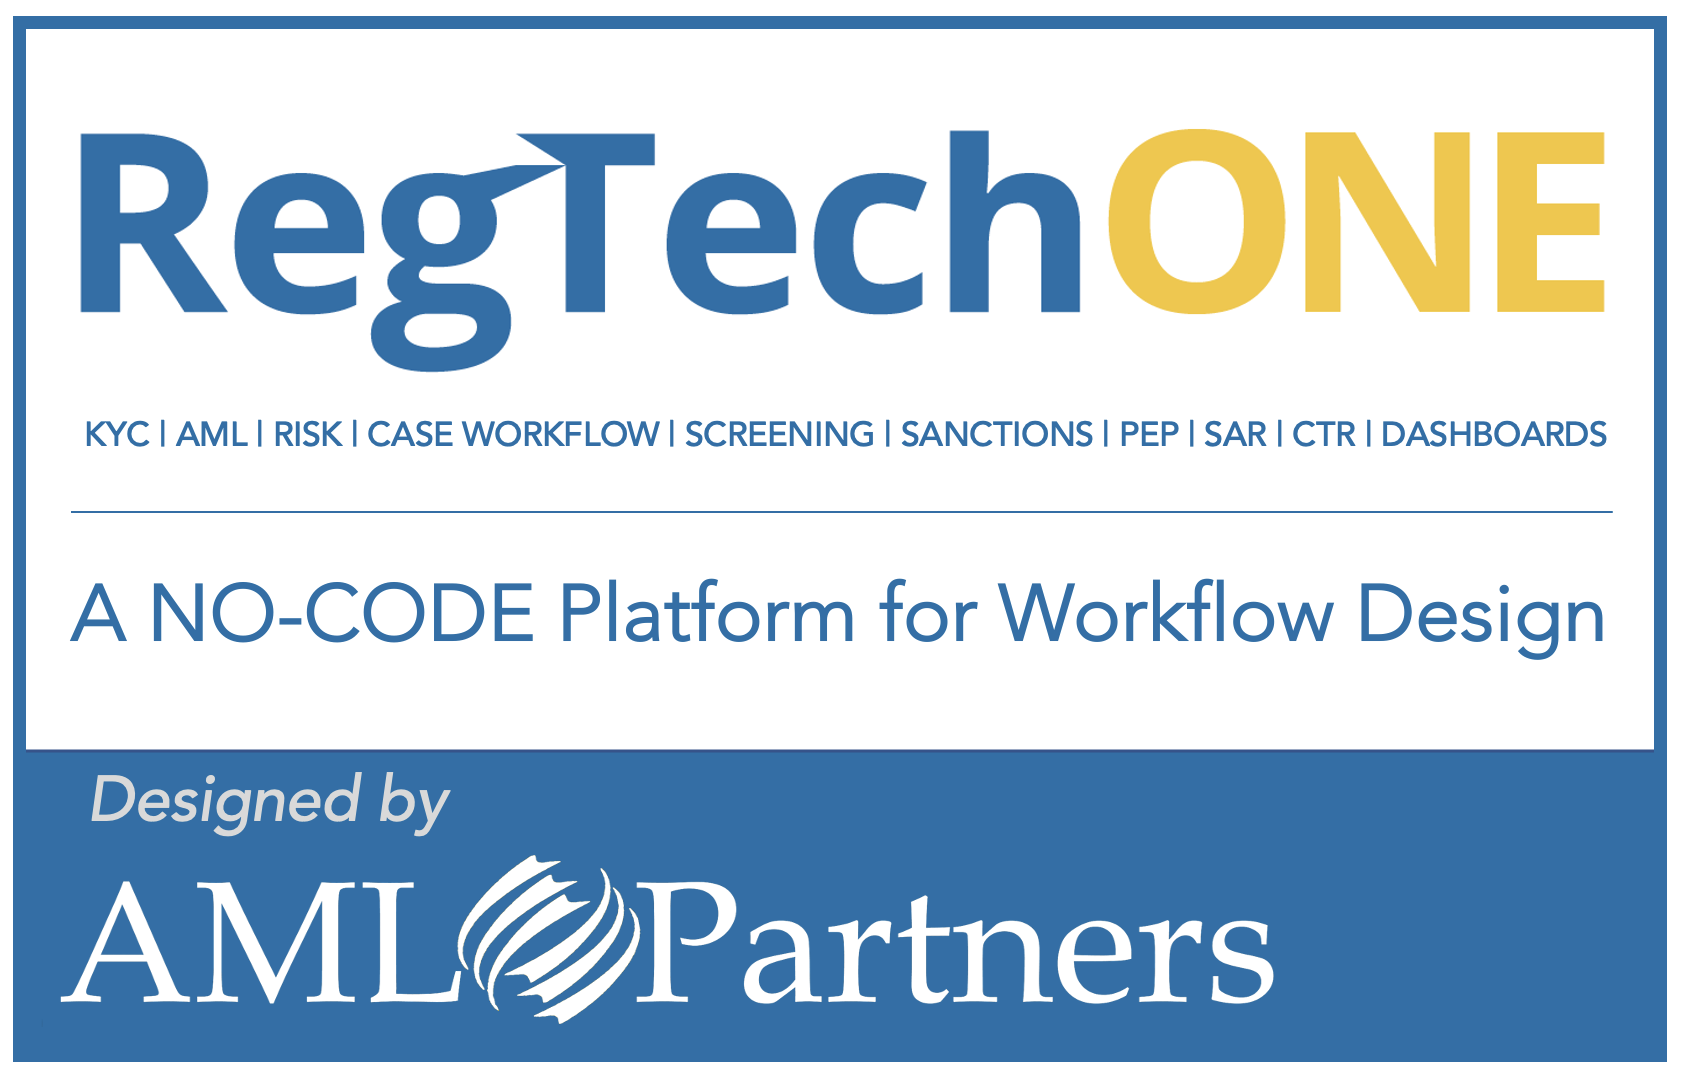 RegTechOne Logo with modules